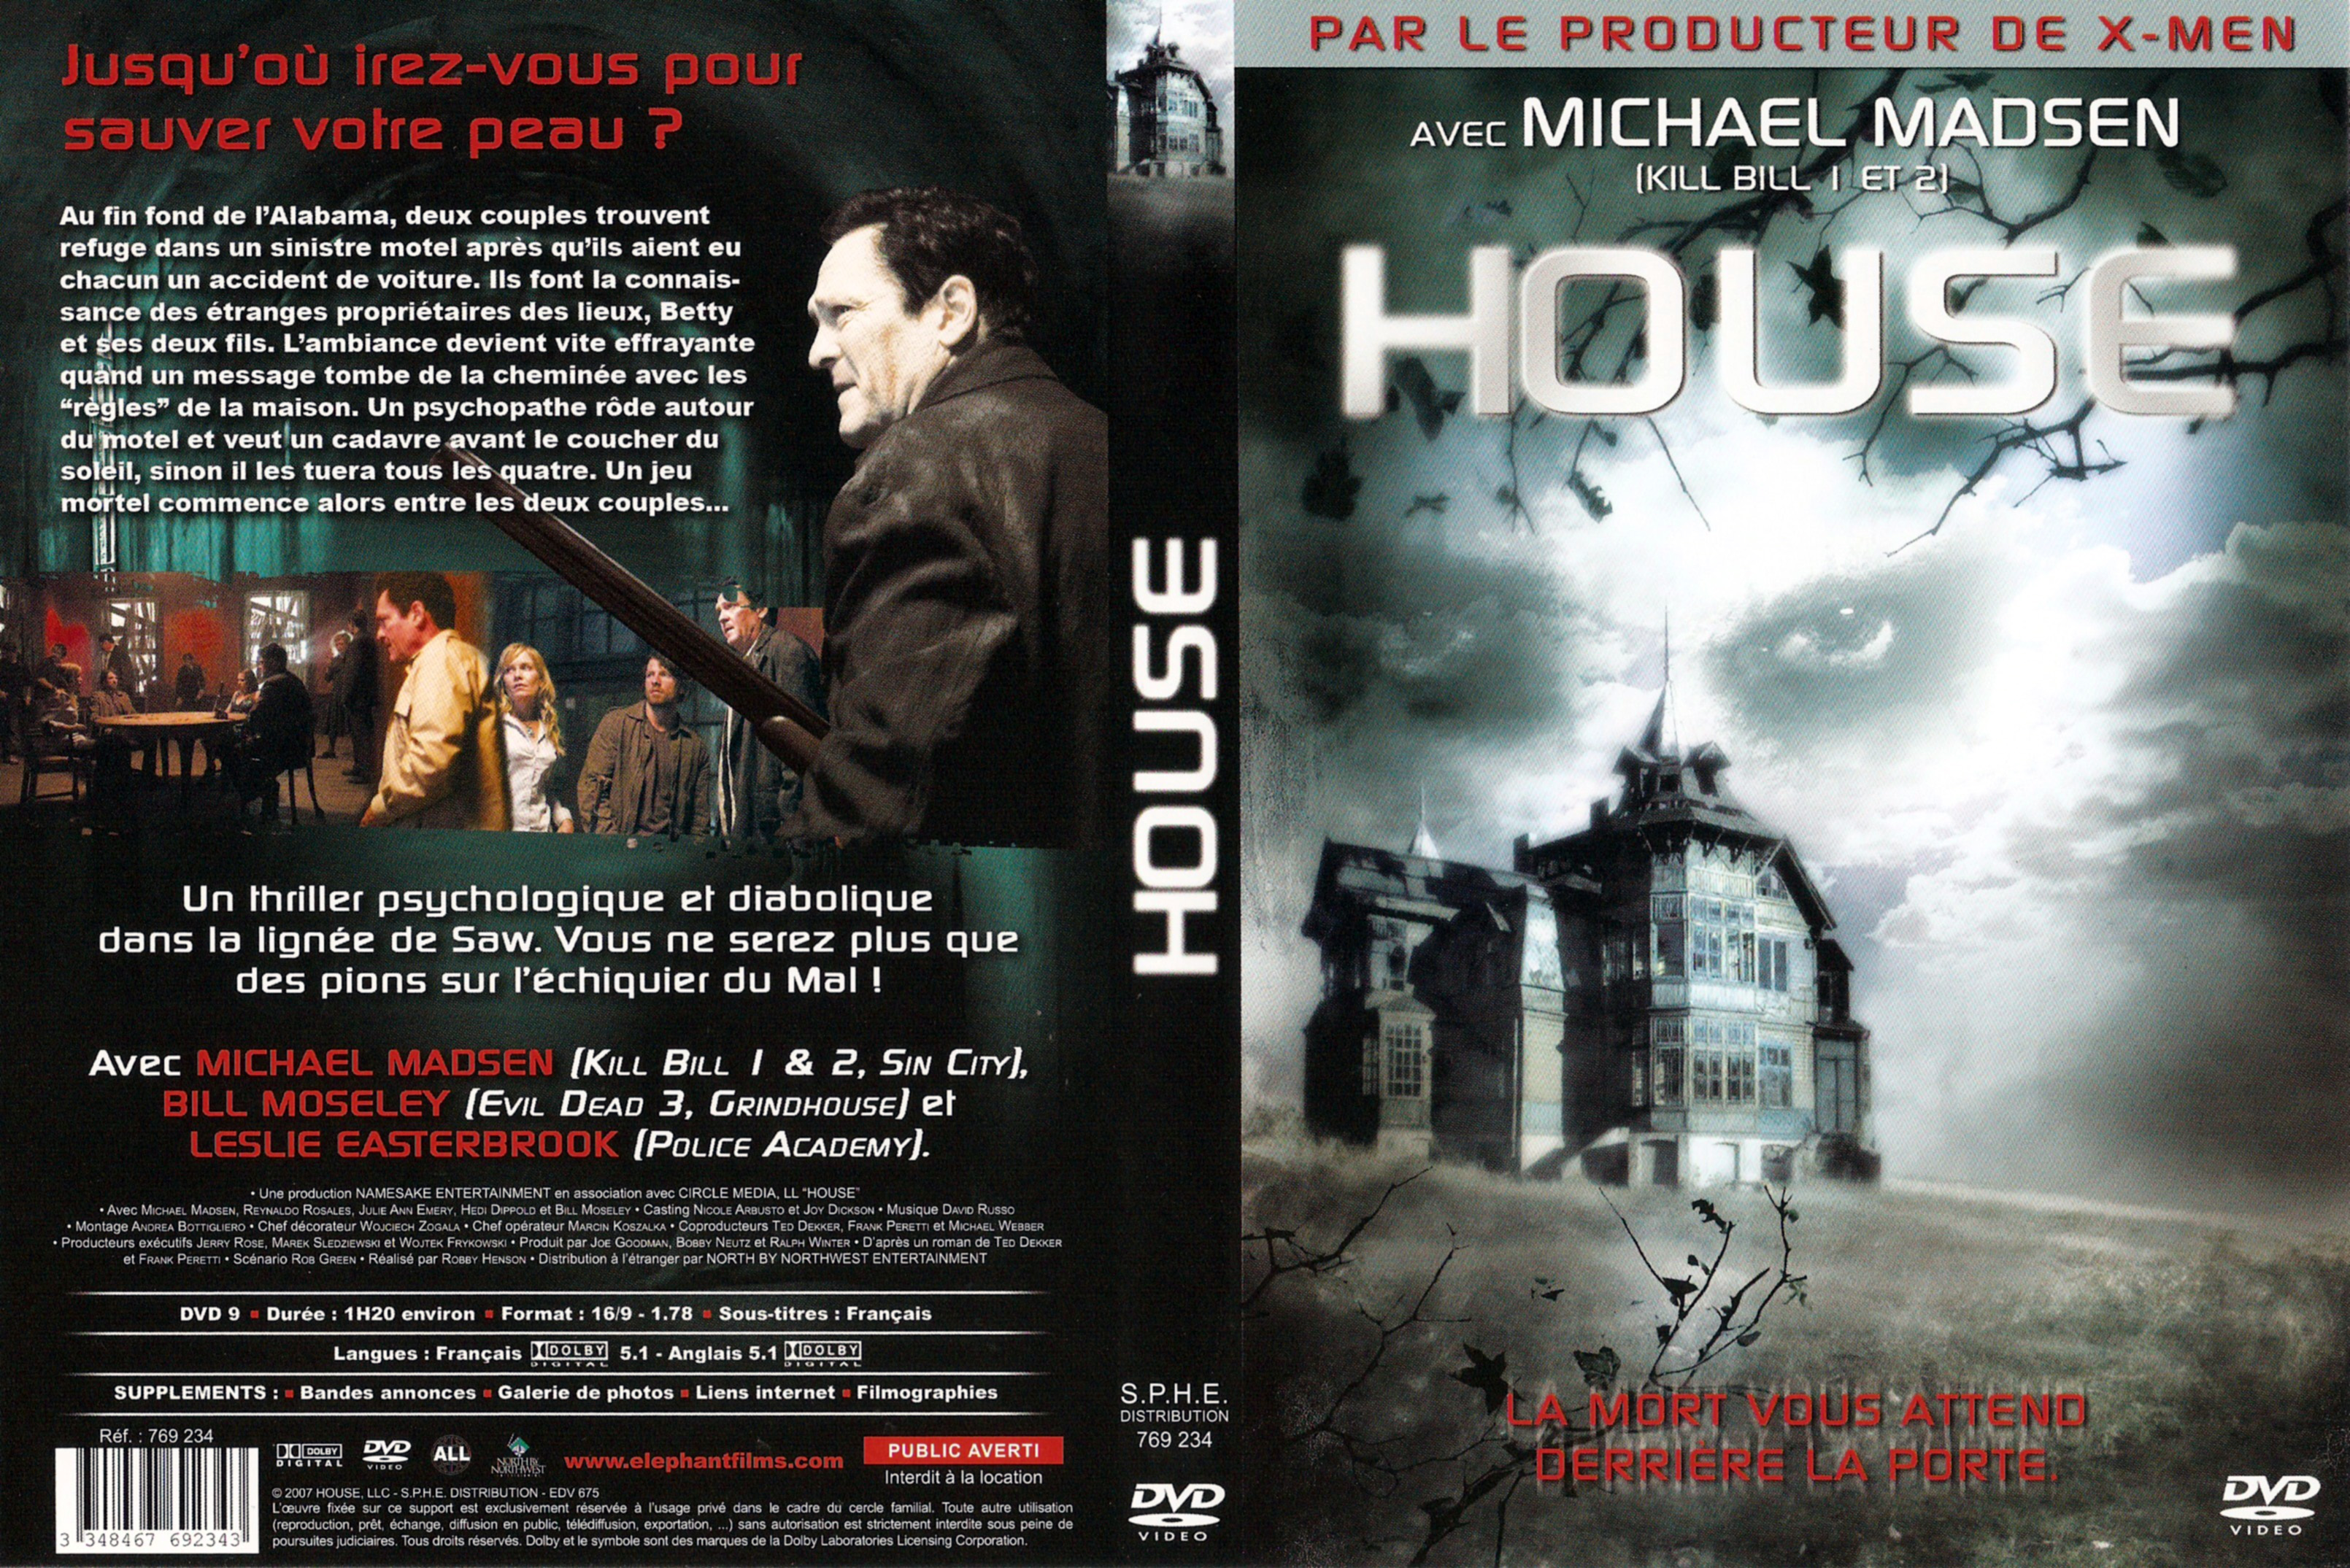 Jaquette DVD House (2008)